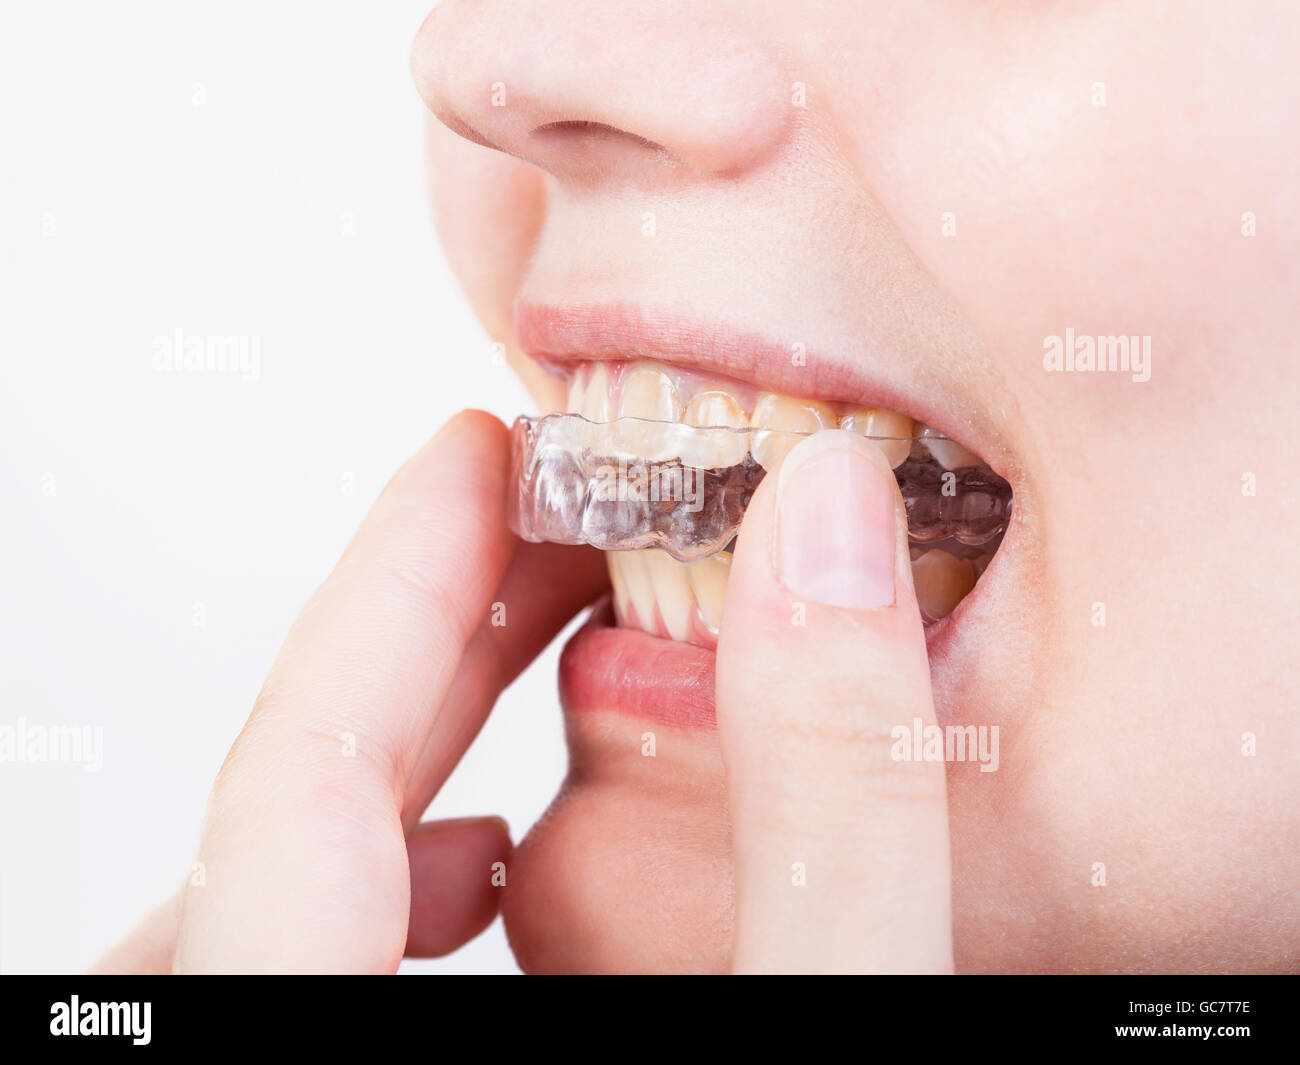 girl fixes transparent aligner for dental treatment Stock Photo